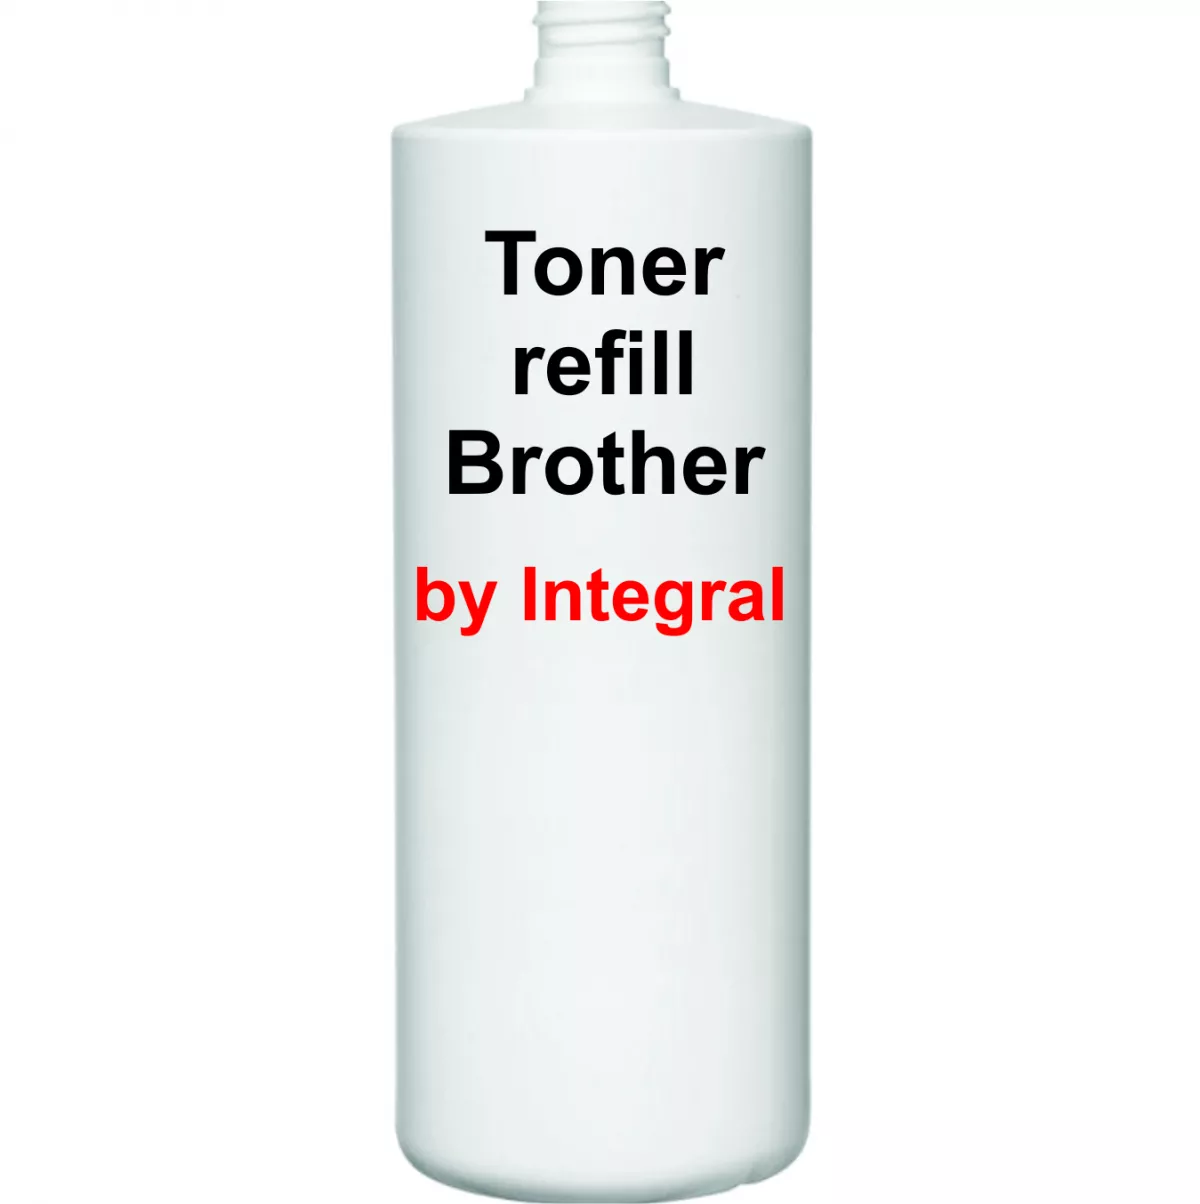 Toner refill Brother TN1030 TN-1030 1000g by Integral, [],erefill.ro